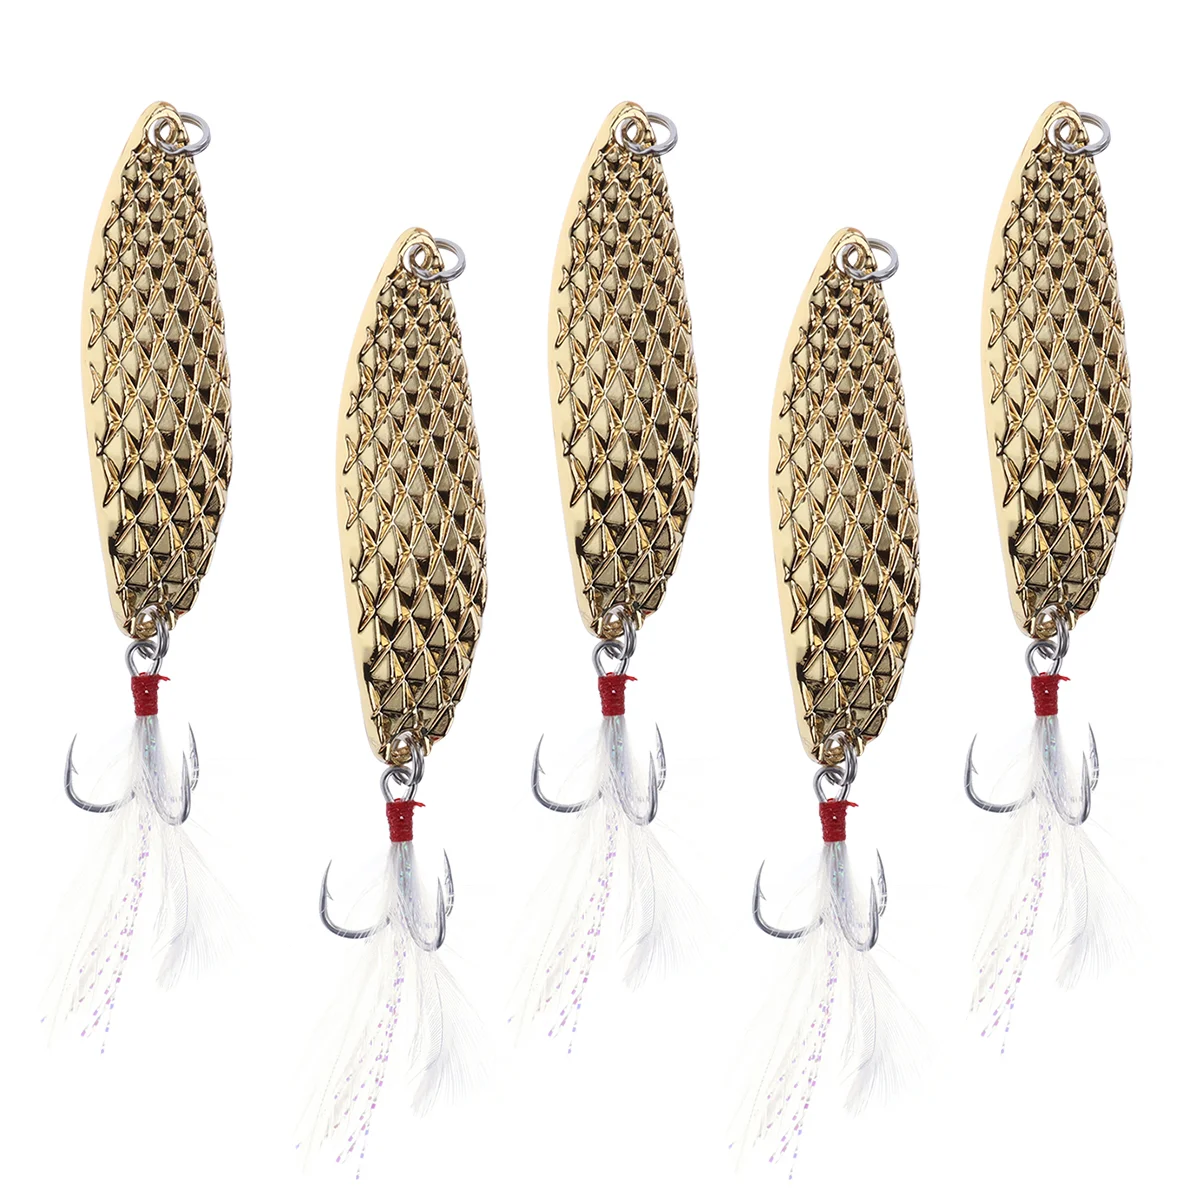 

5pcs Spoons Hard Fishing Lures Treble Hooks Metal Fishing Lure Baits Fishing Accessories (Golden Lure + White ) Goods